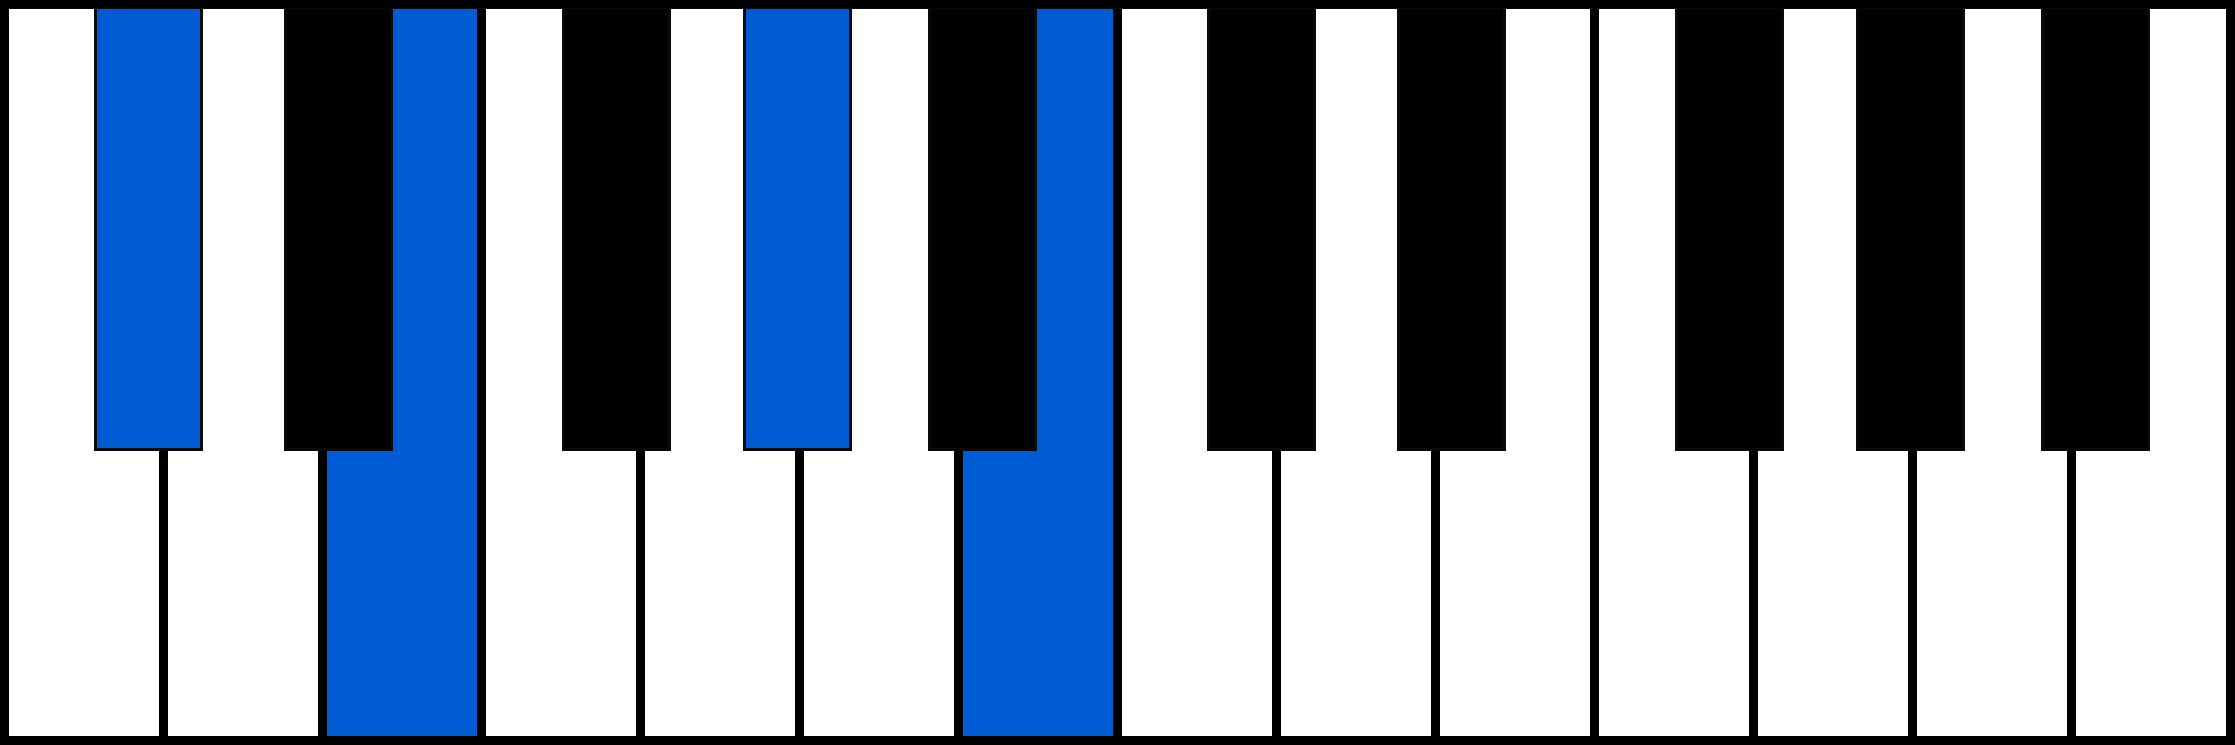 C#m7 piano chord fingering